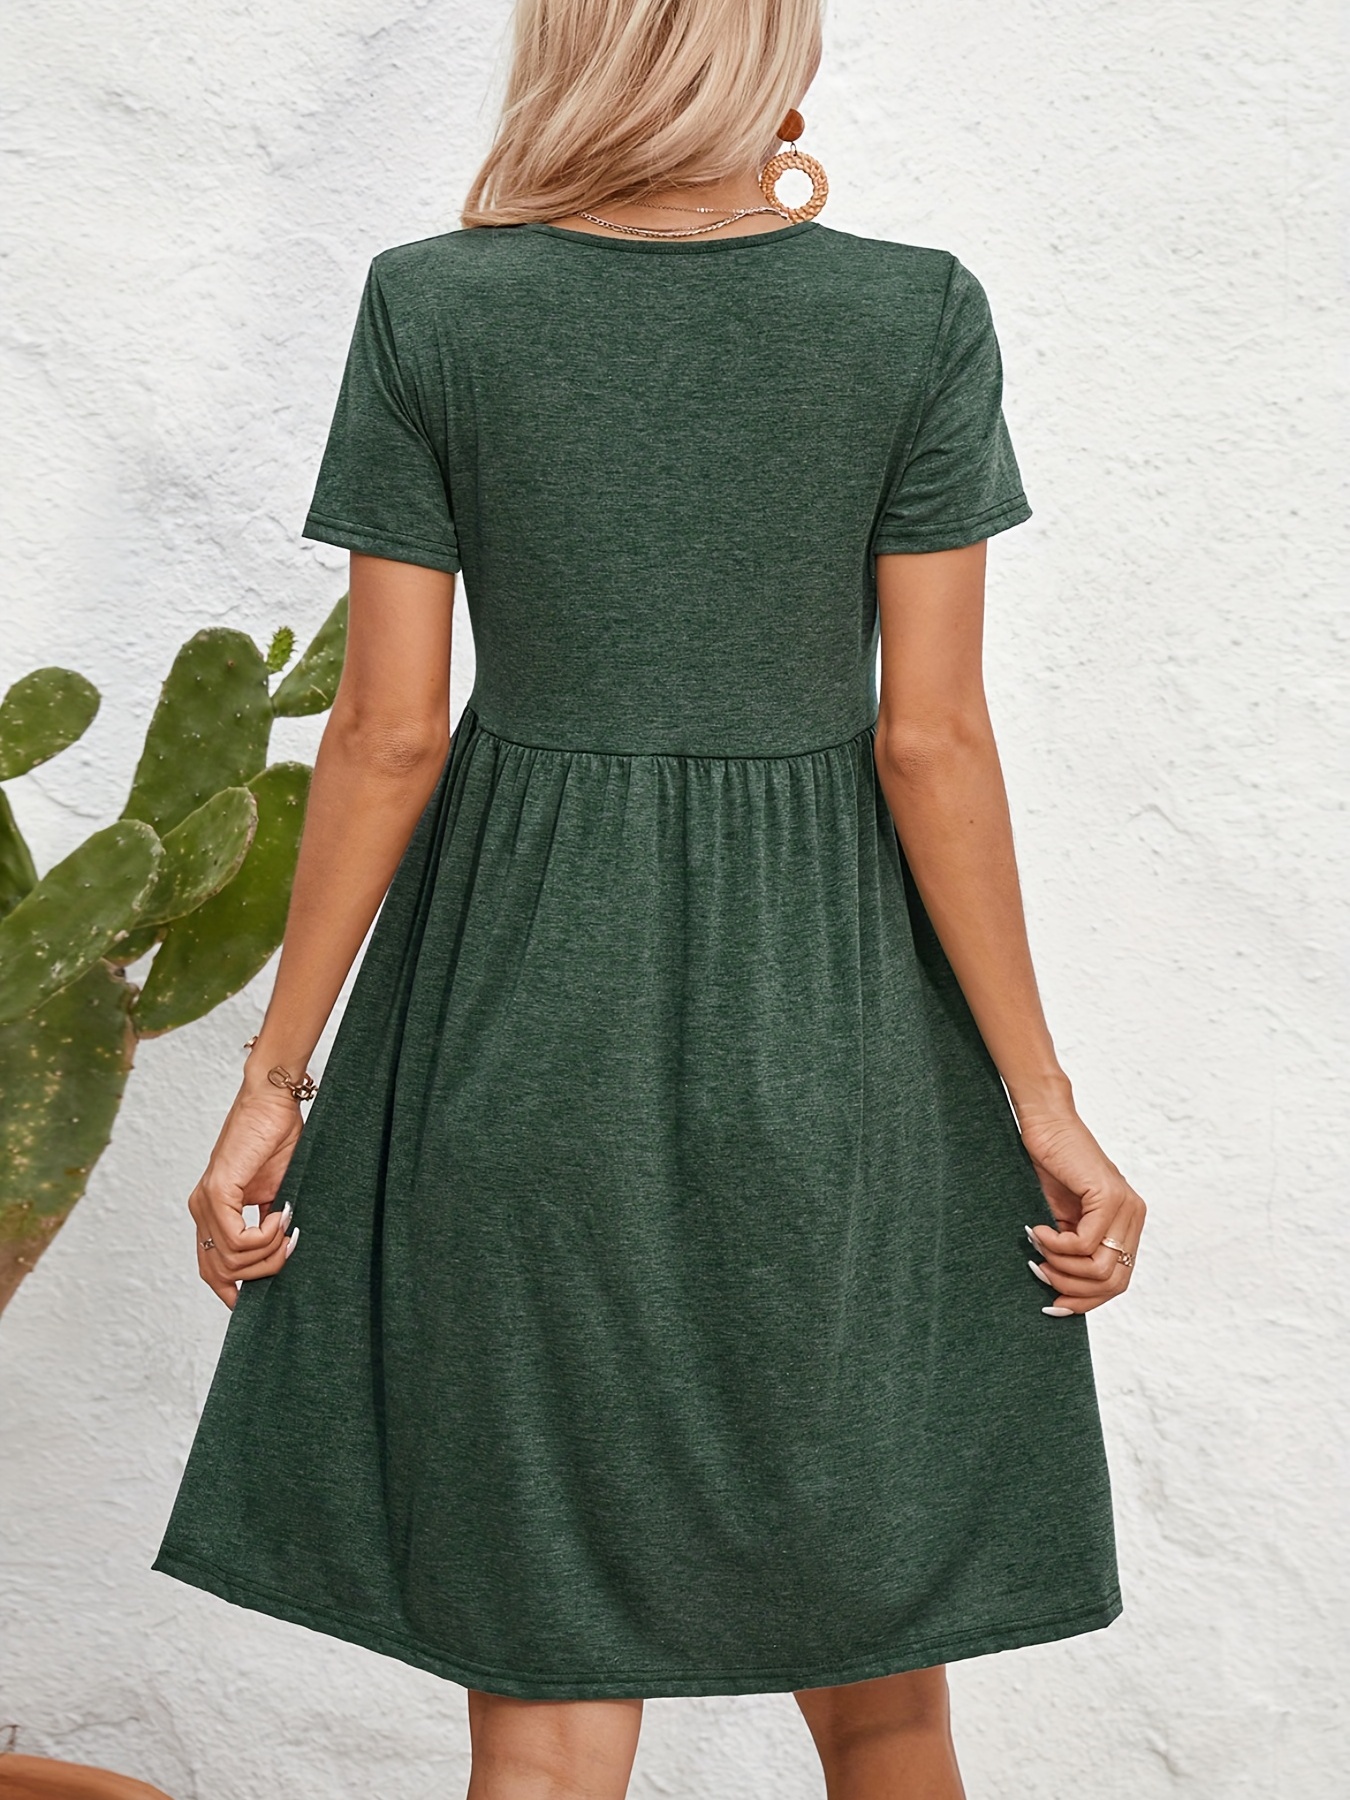 Pleated Tunic Dress - Olive green - Ladies